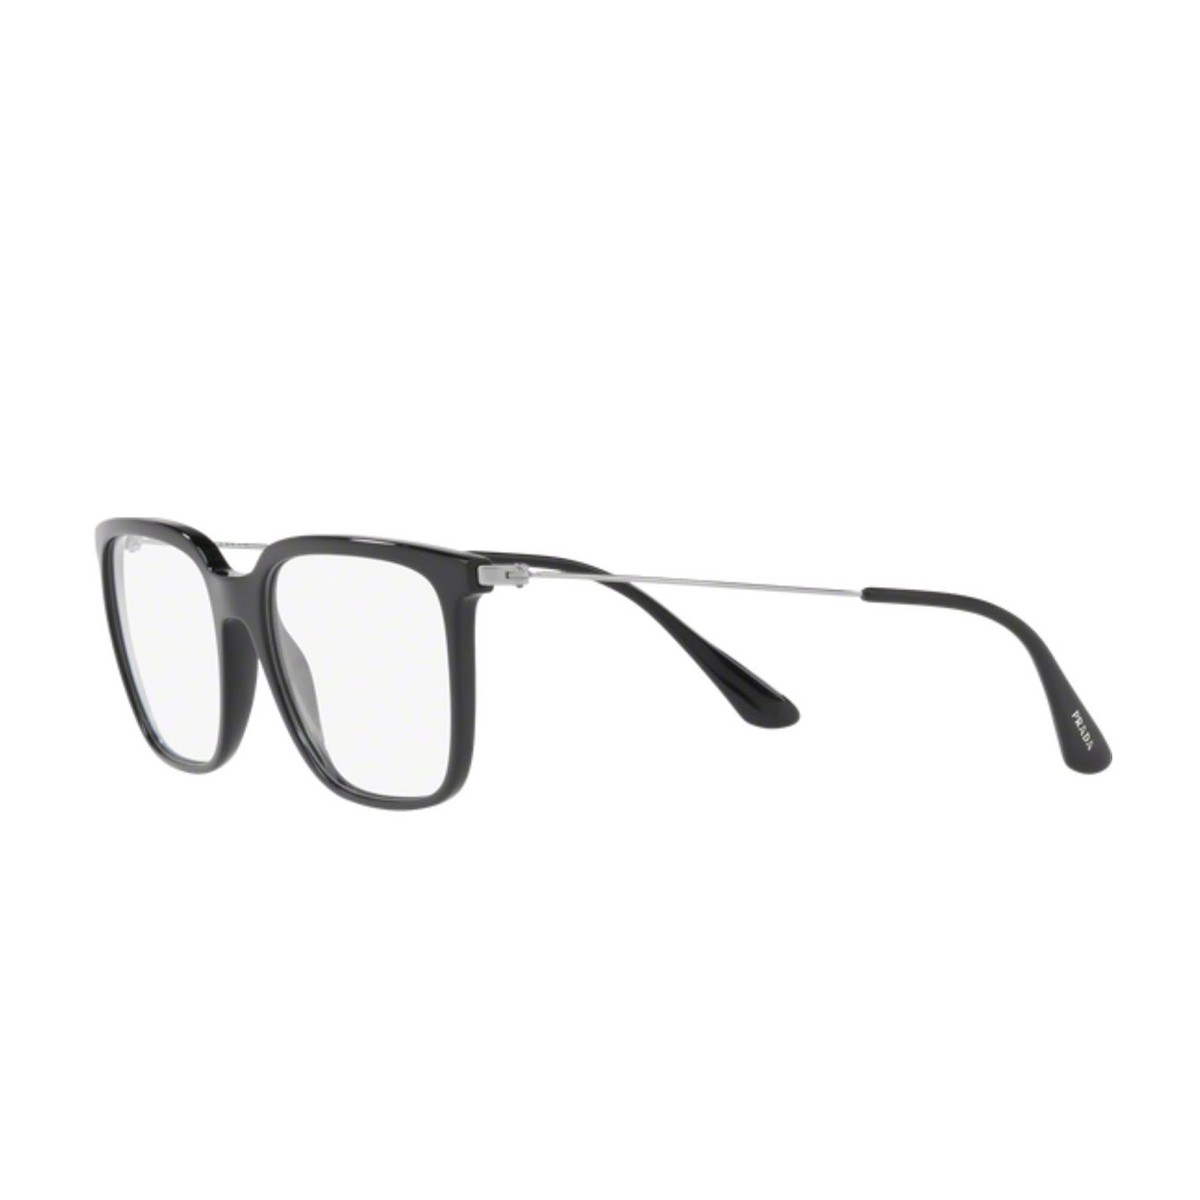 Prada PR17TV | Men's eyeglasses